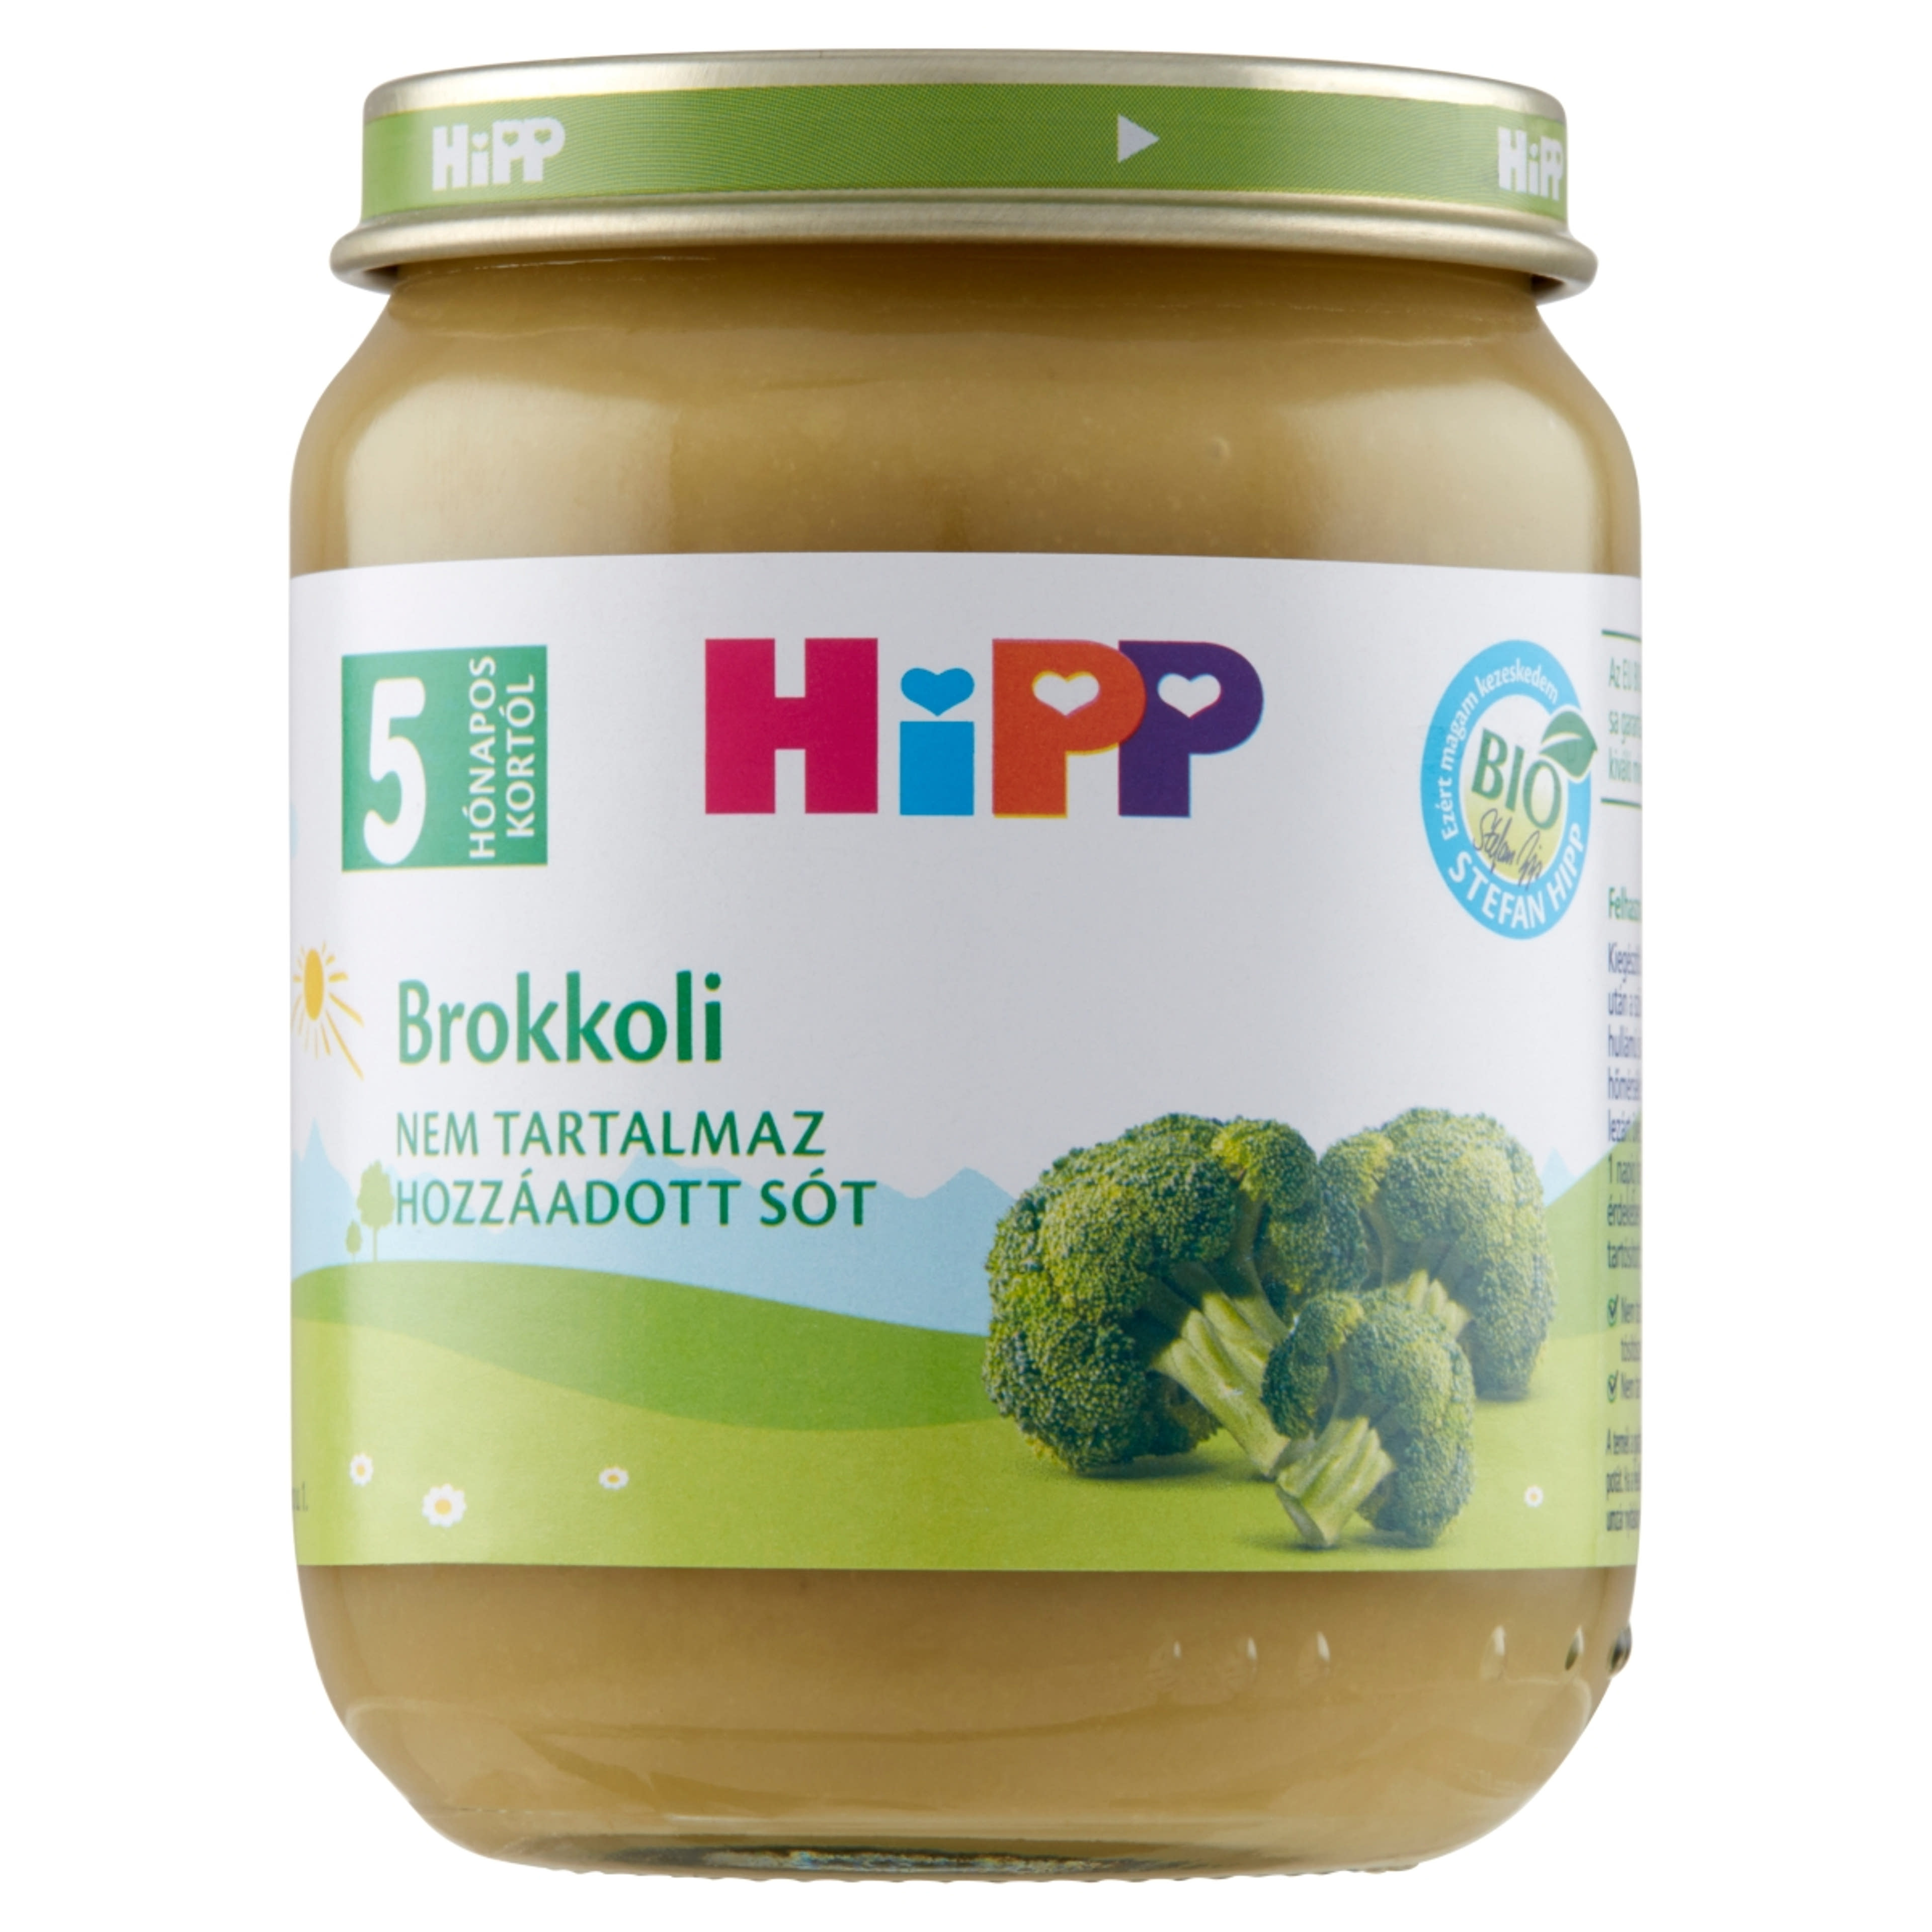 Hipp bio brokkoli 5 hónapos kortól - 125 g